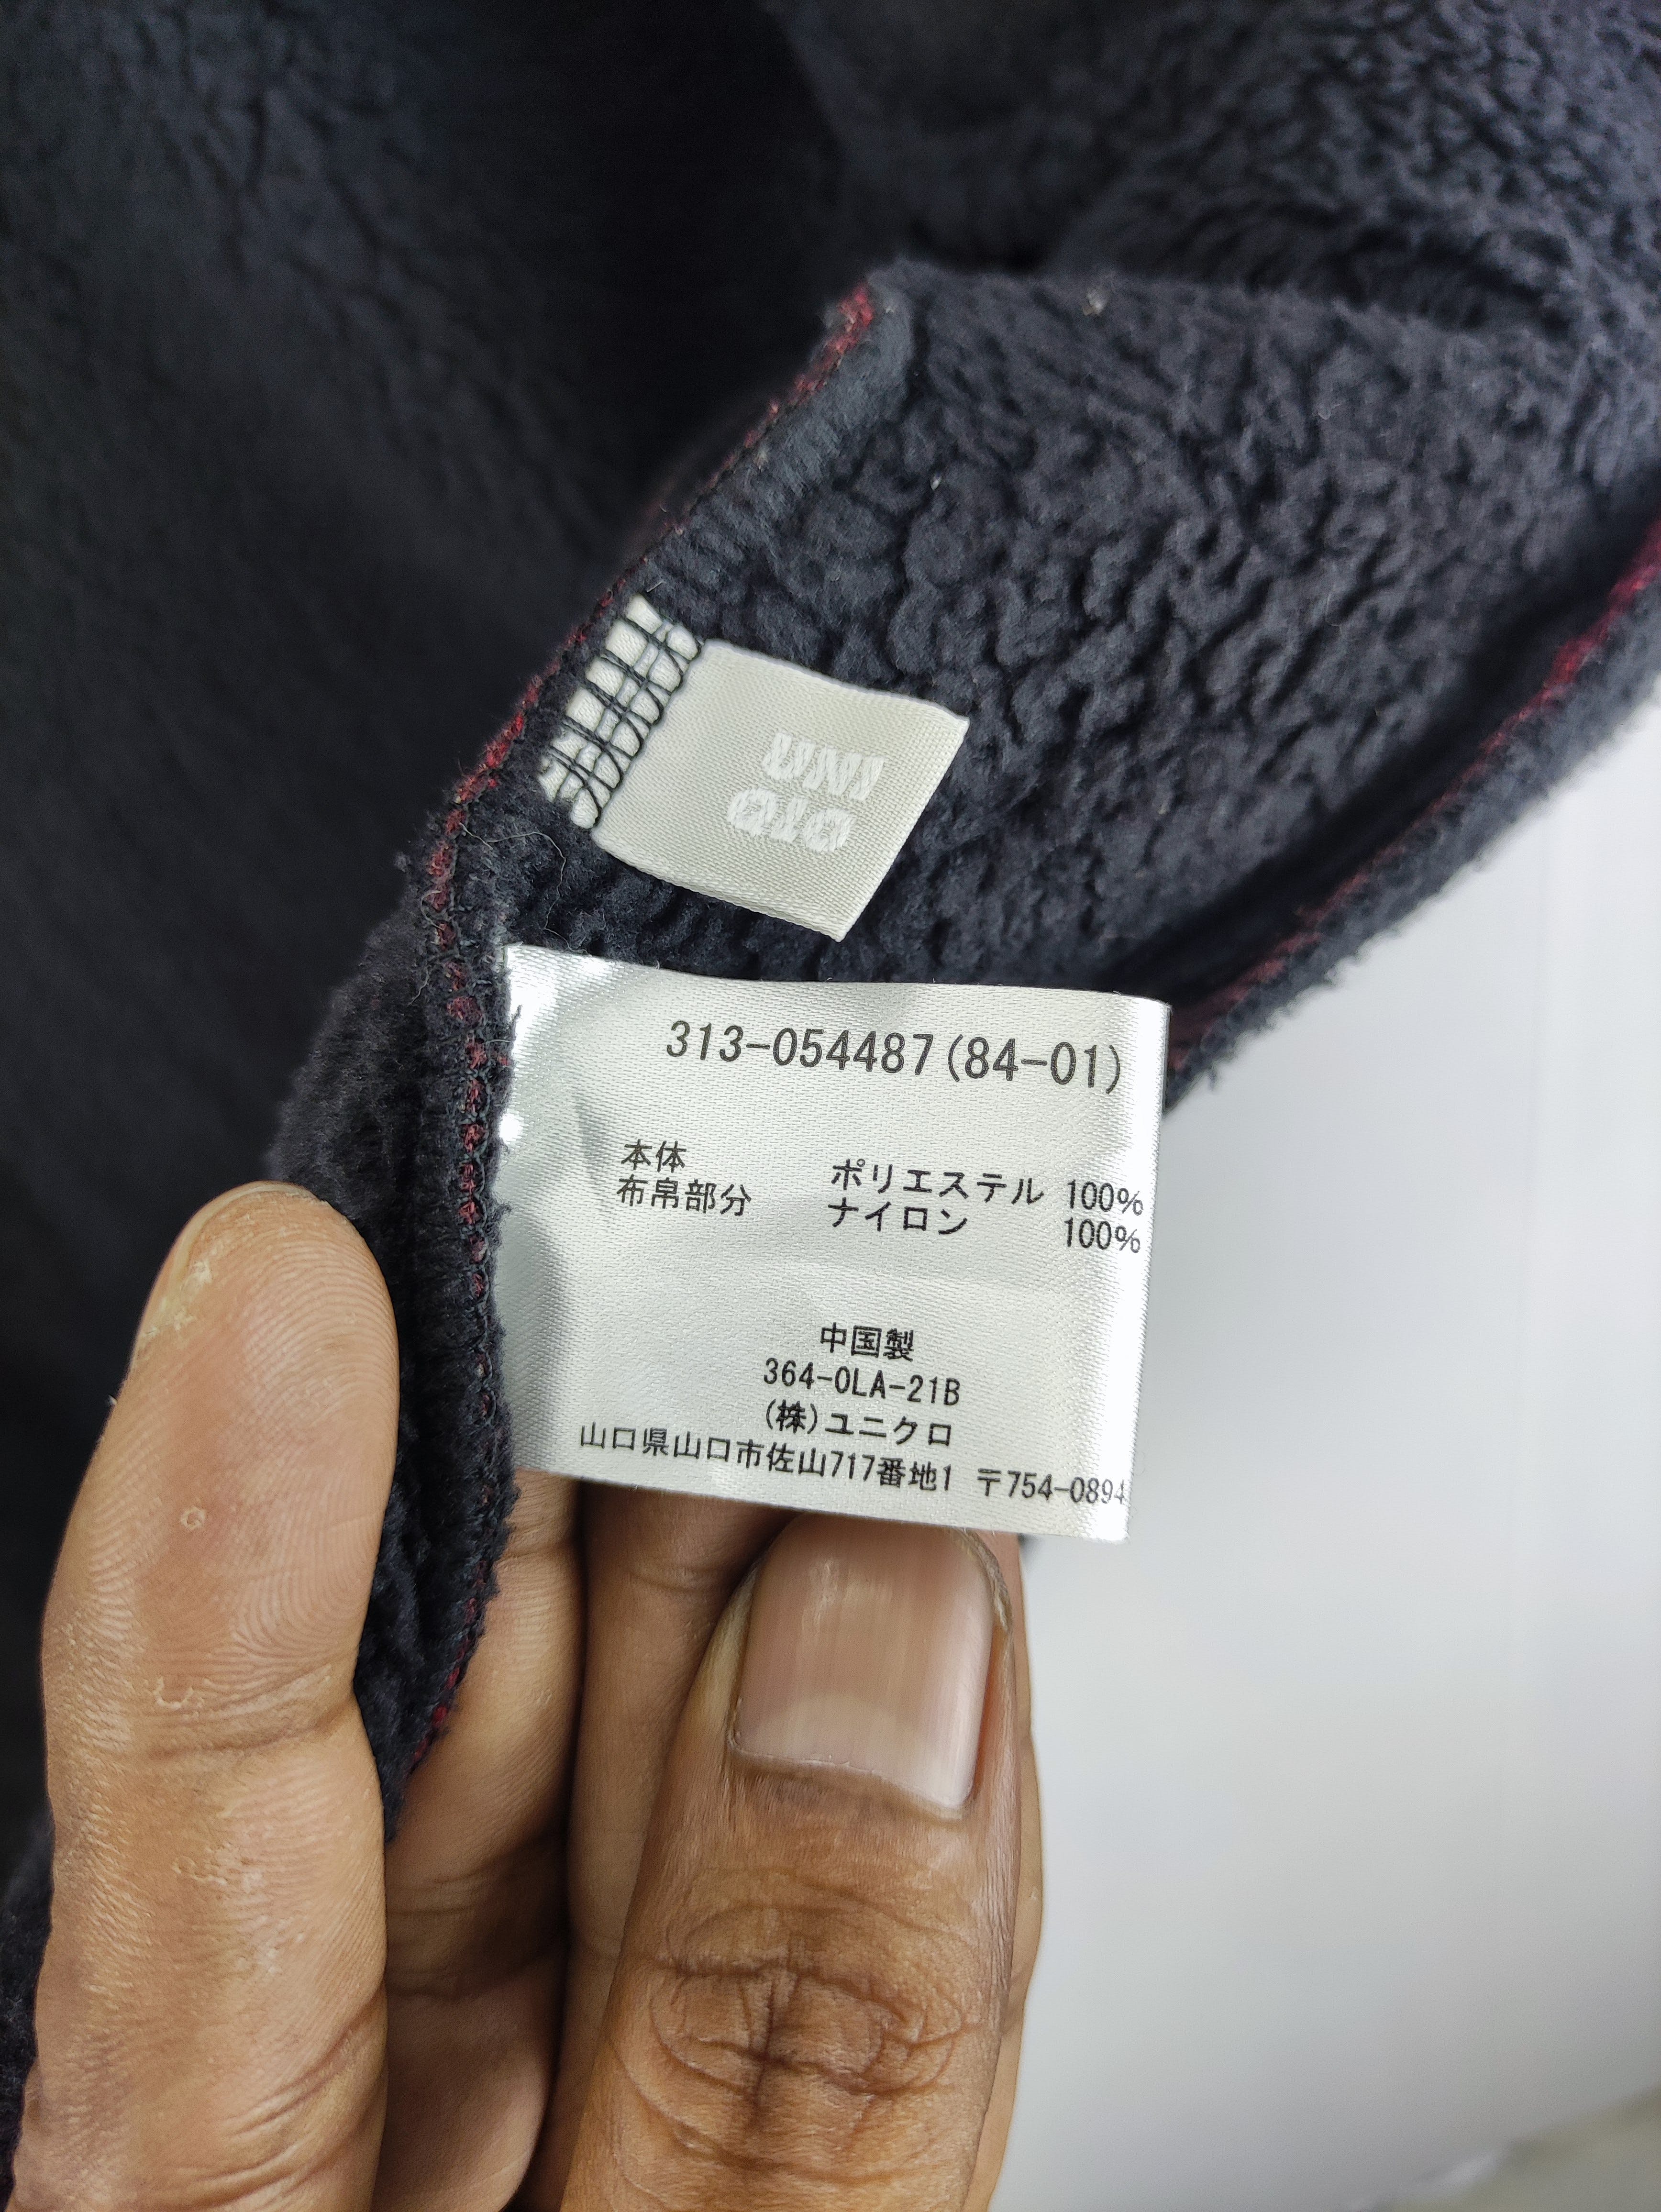 Uniqlo Fleece Jacket Plaid Zipper - 6